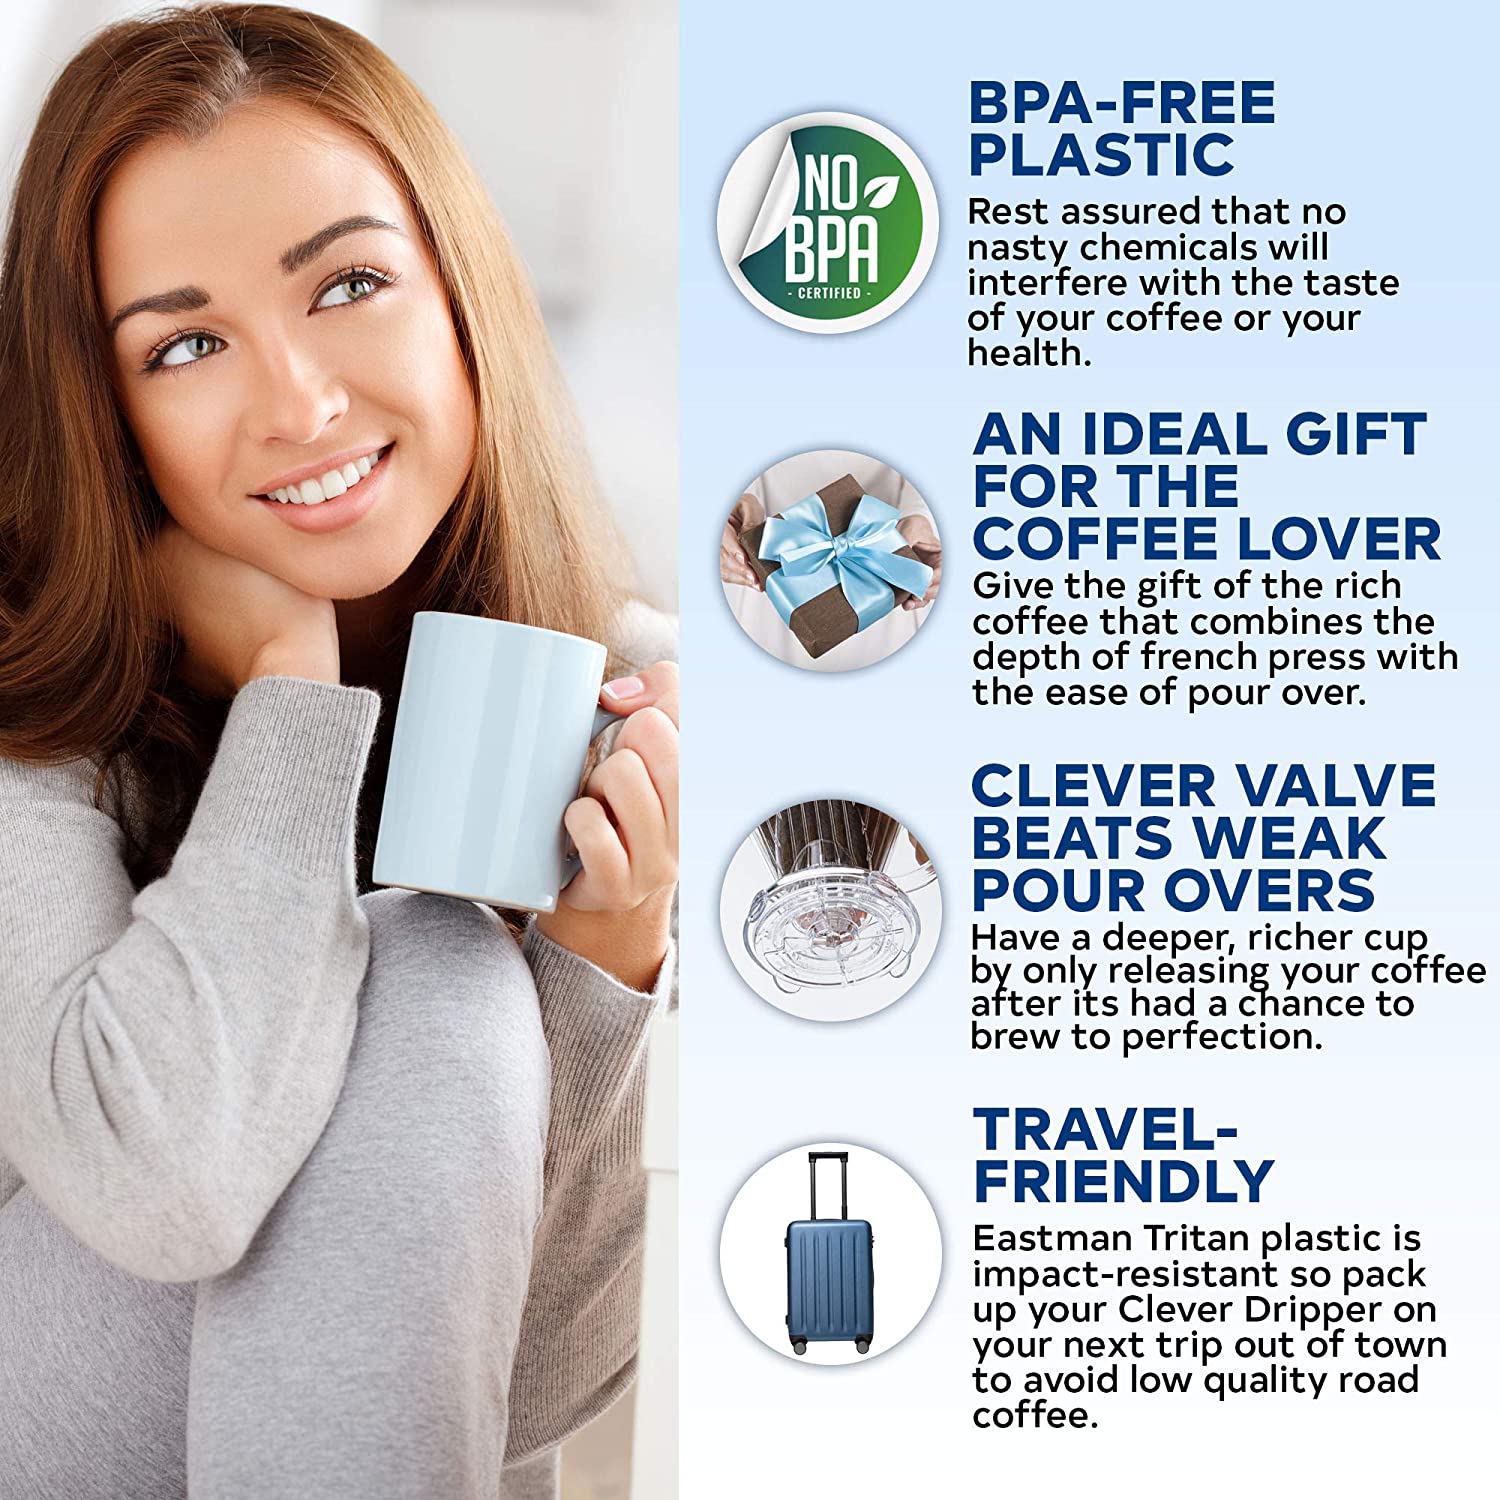 Clever Dripper Macaron Blue Genuine Coffee Maker, Safe BPA Free Plastic